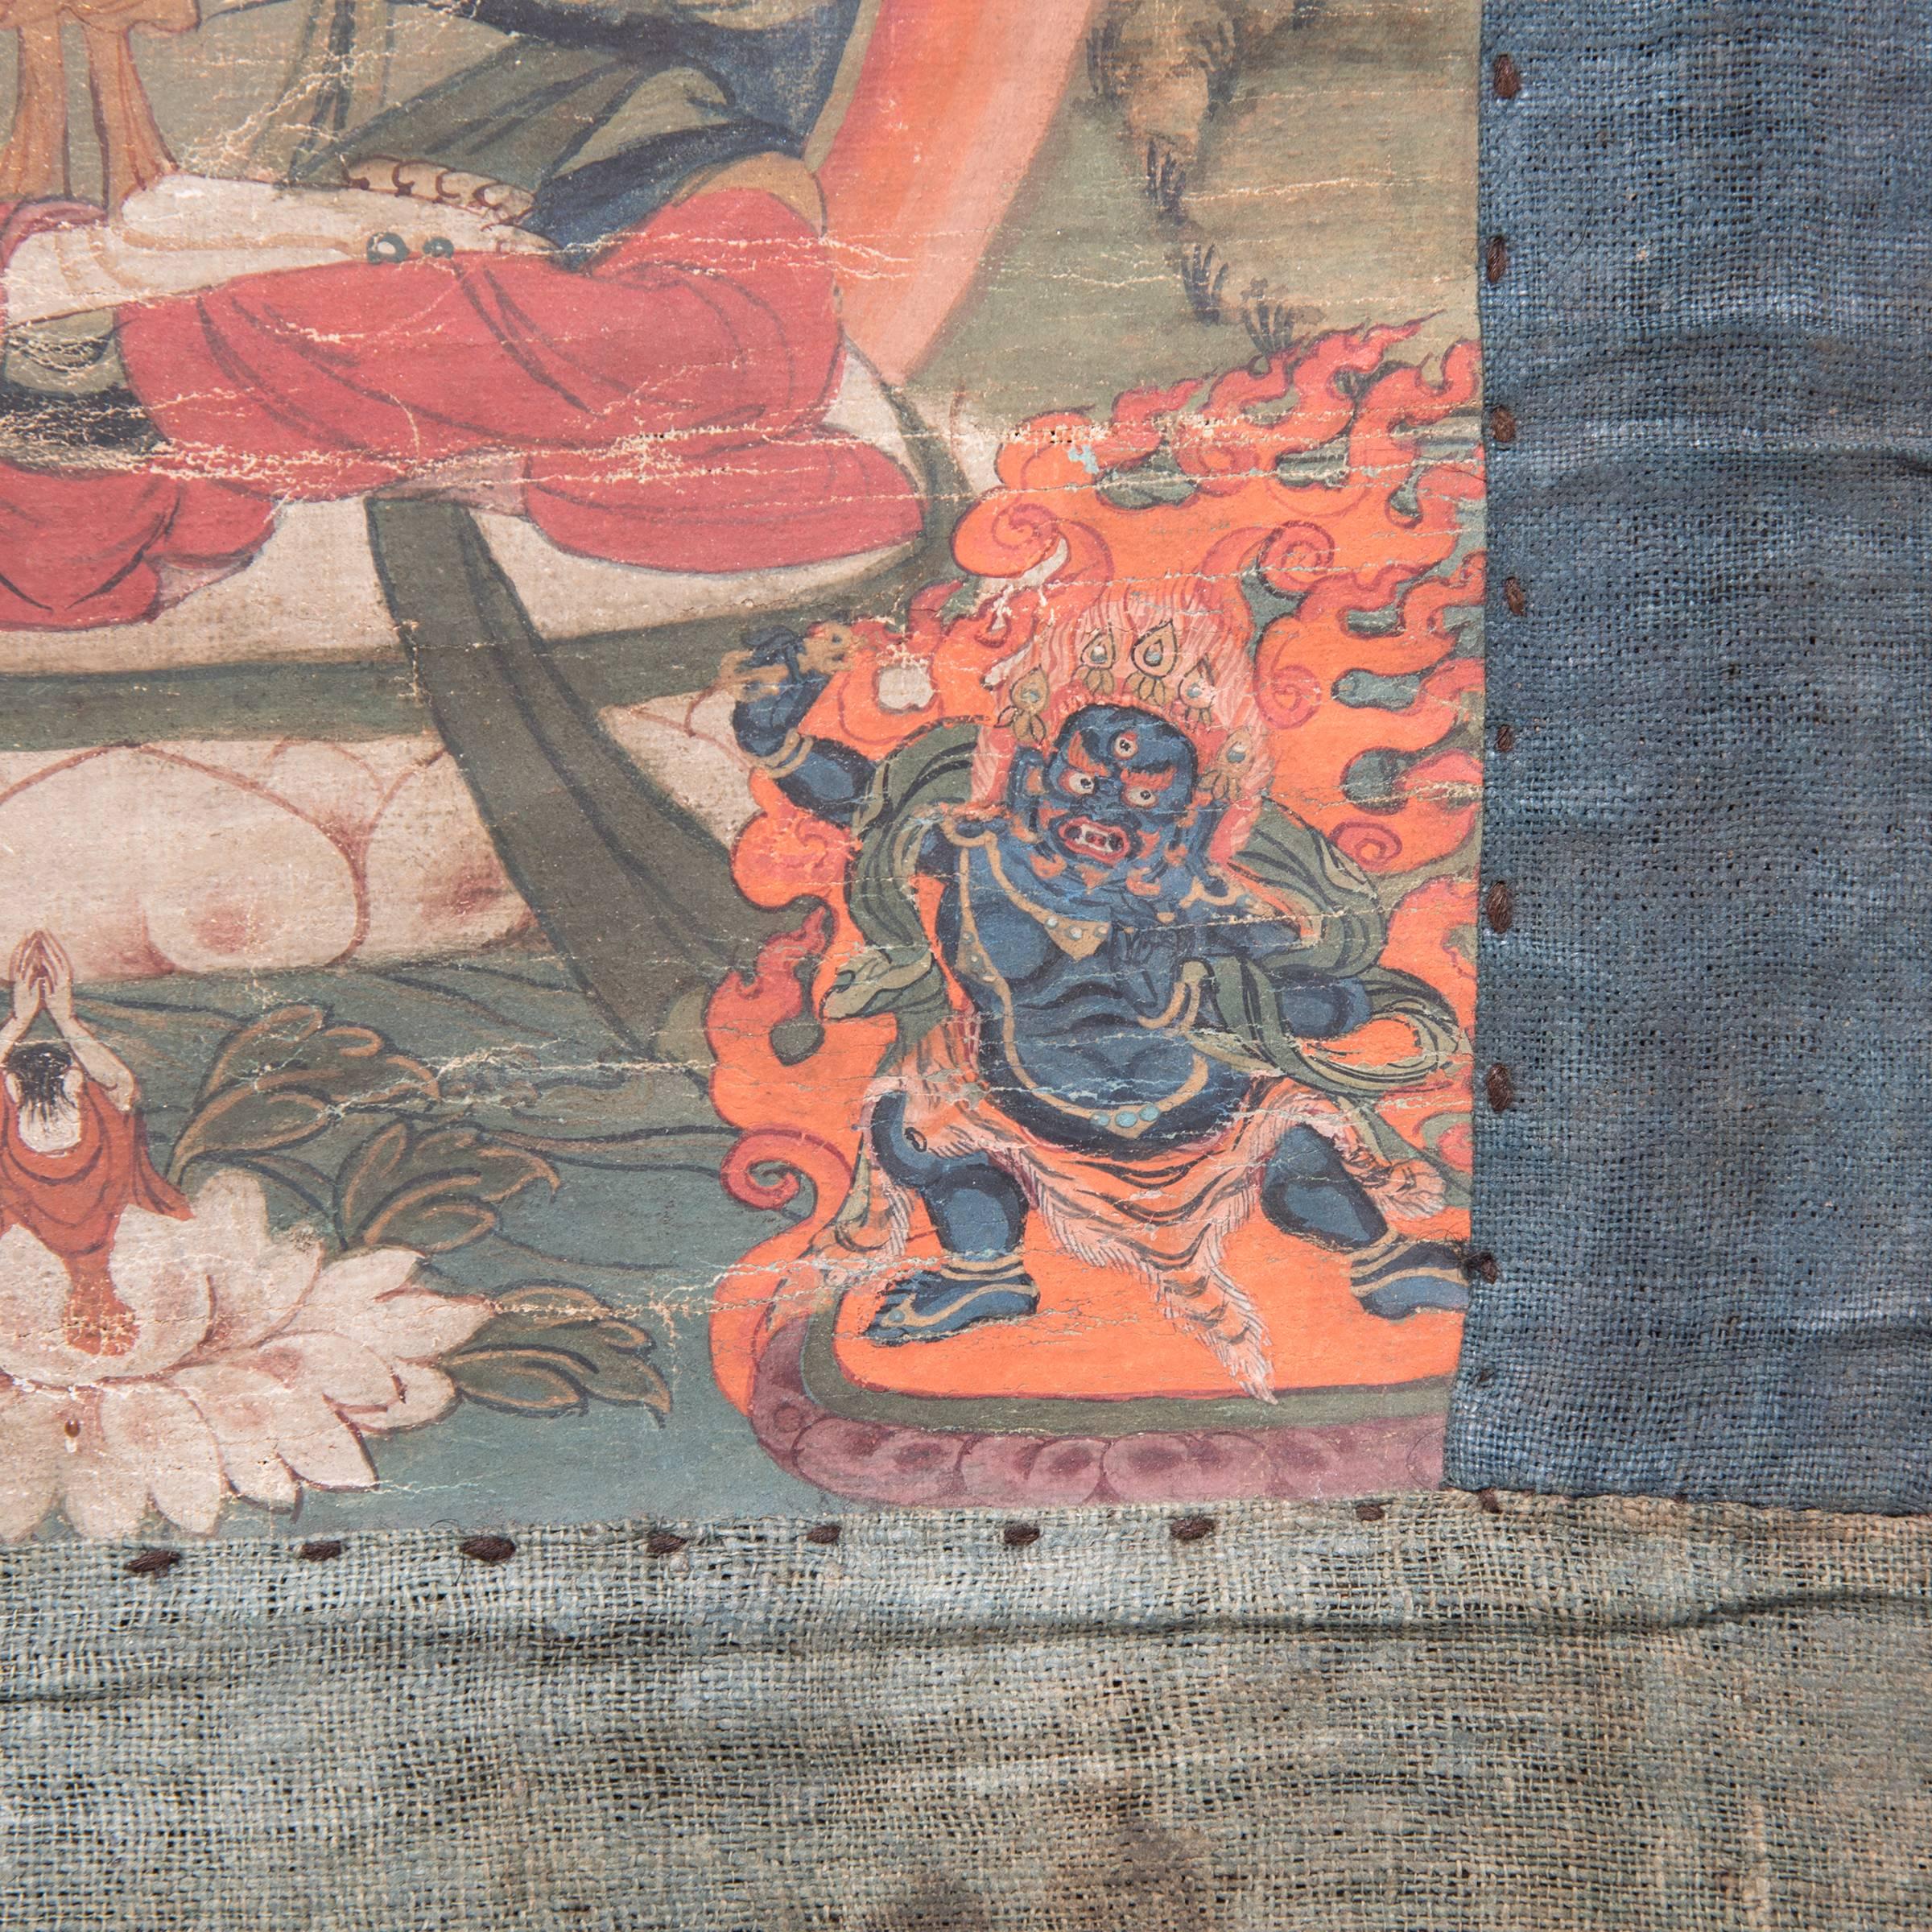 Painted Early 20th Century Tibetan Thangka